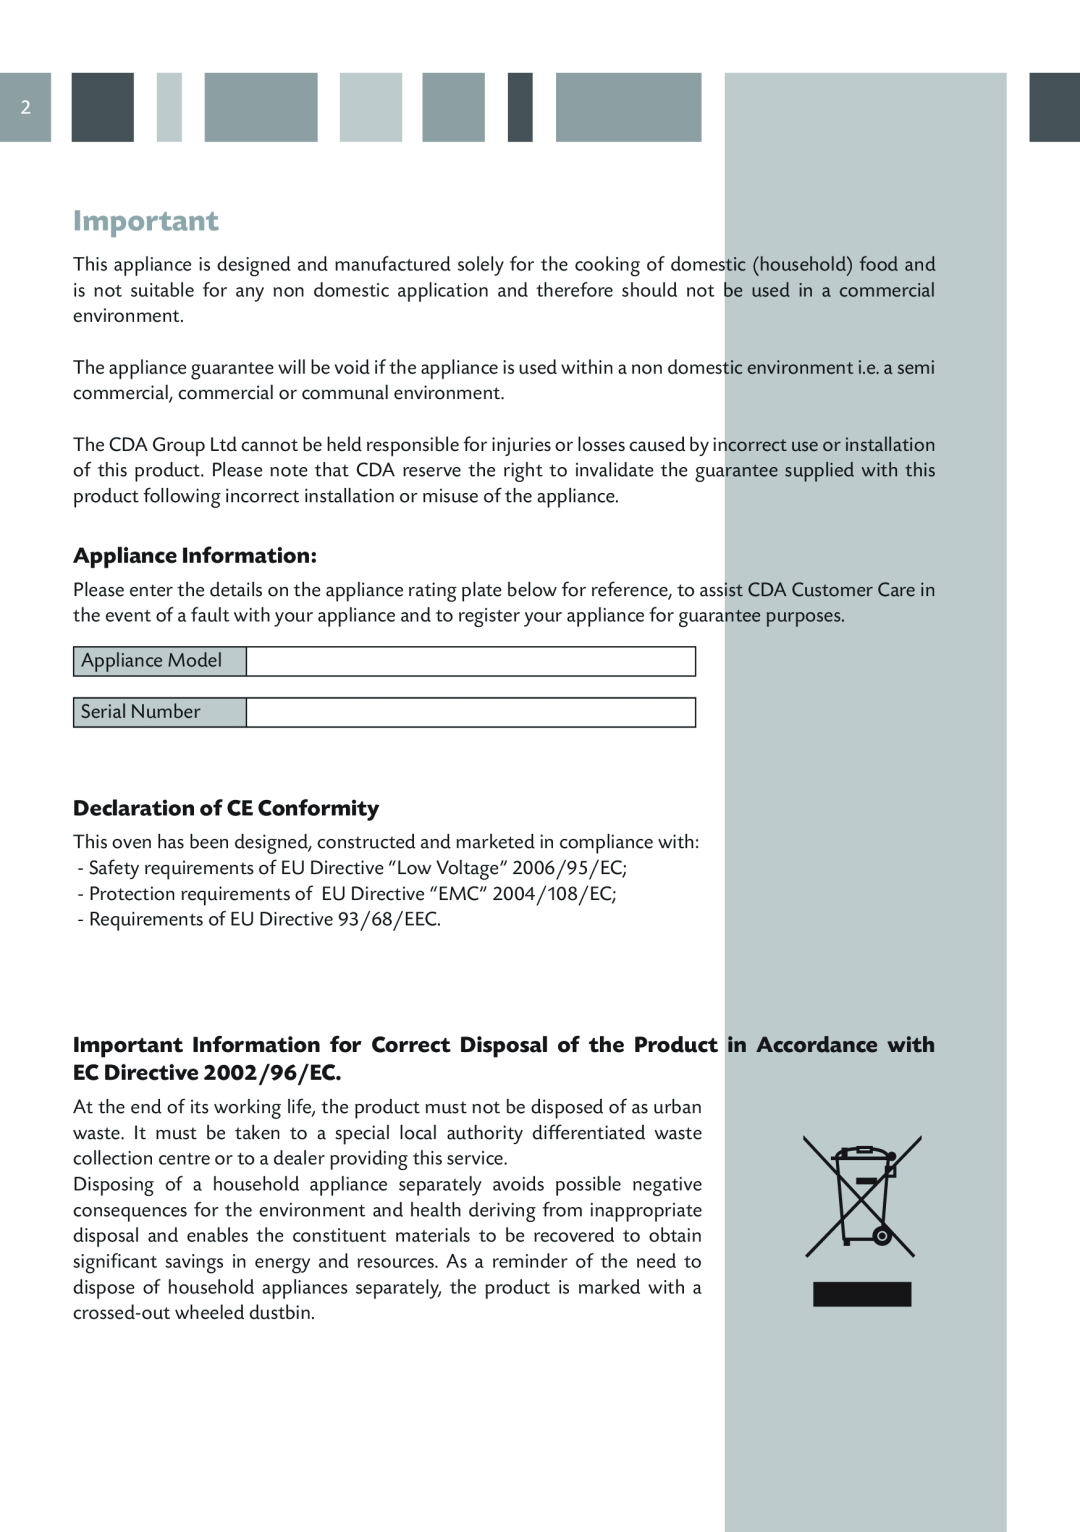 CDA 6Q6, 6Z6, 6V6 manual Appliance Information, Declaration of CE Conformity 